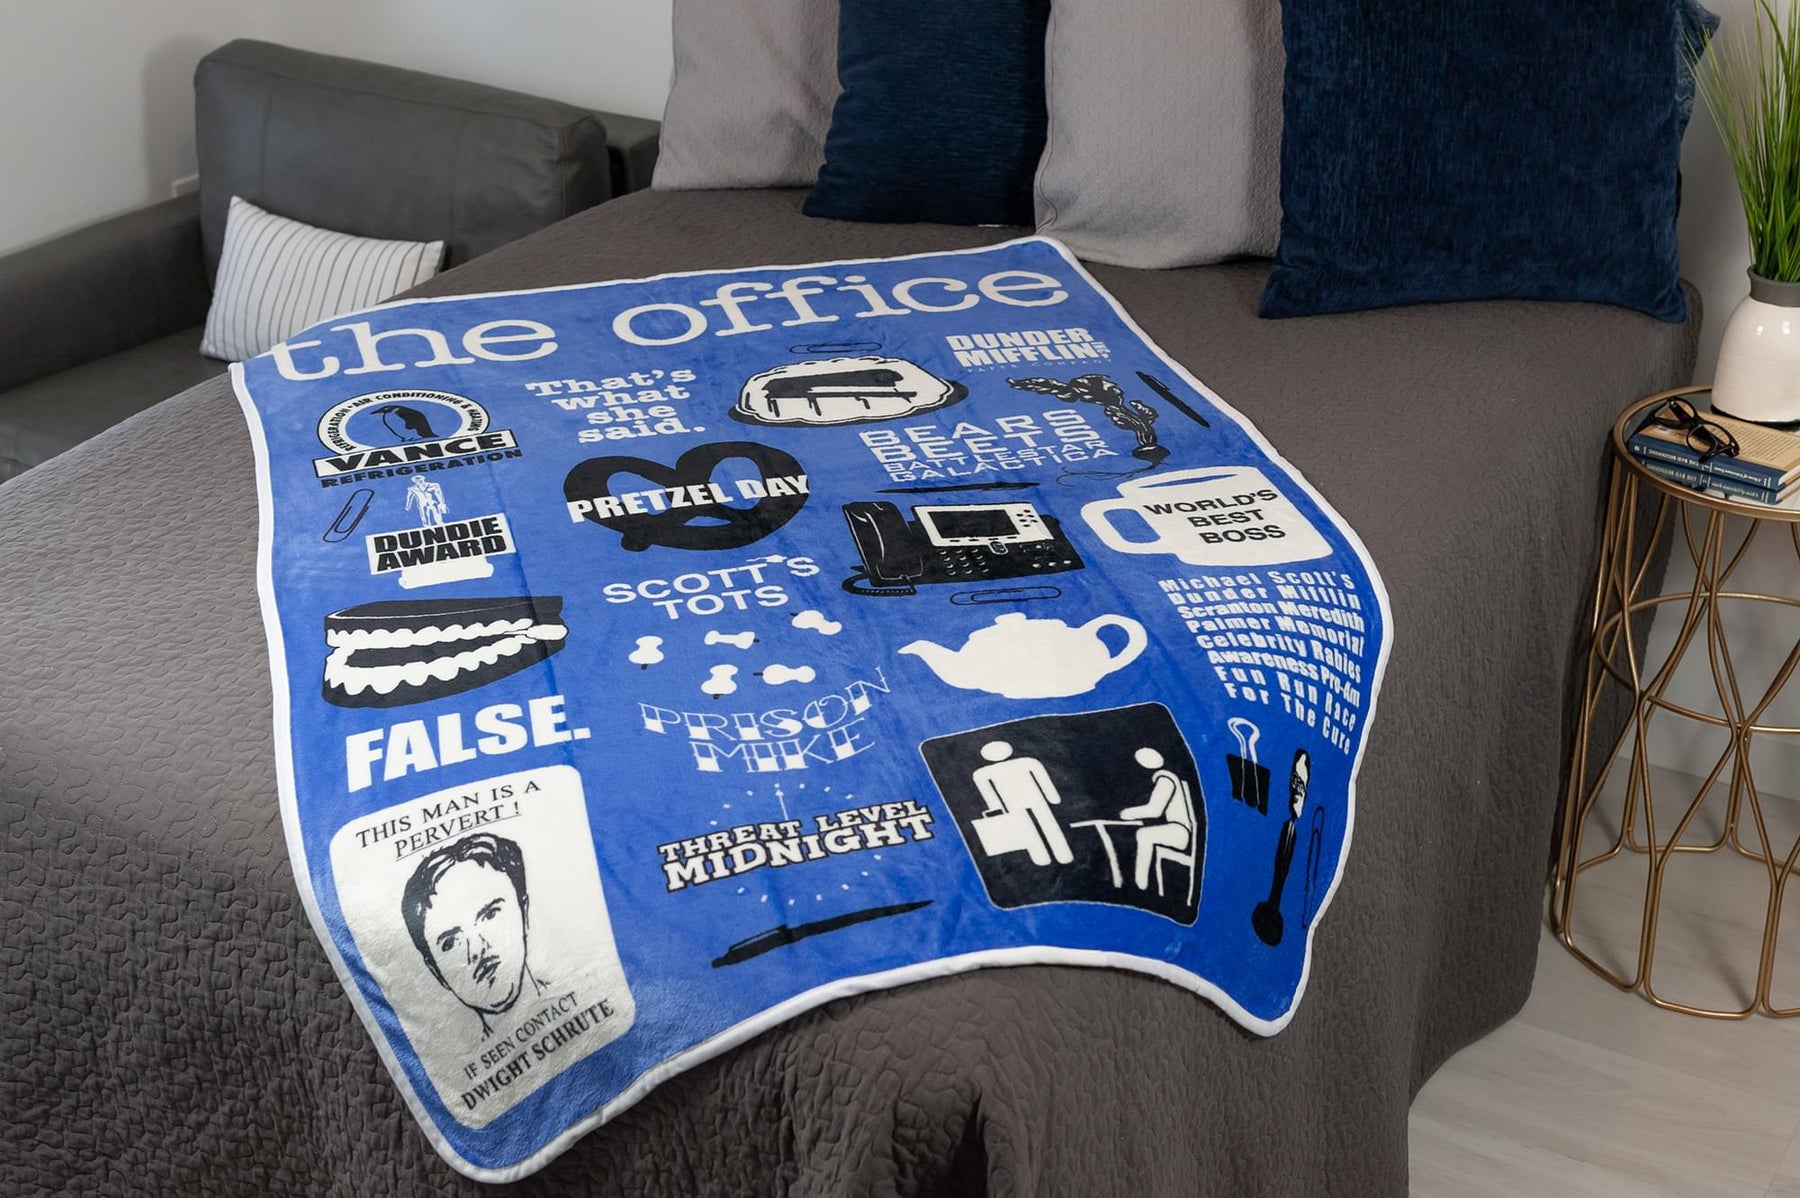 The Office Iconography Fleece Blanket | 45 x 60-Inch Fun Throw Blanket